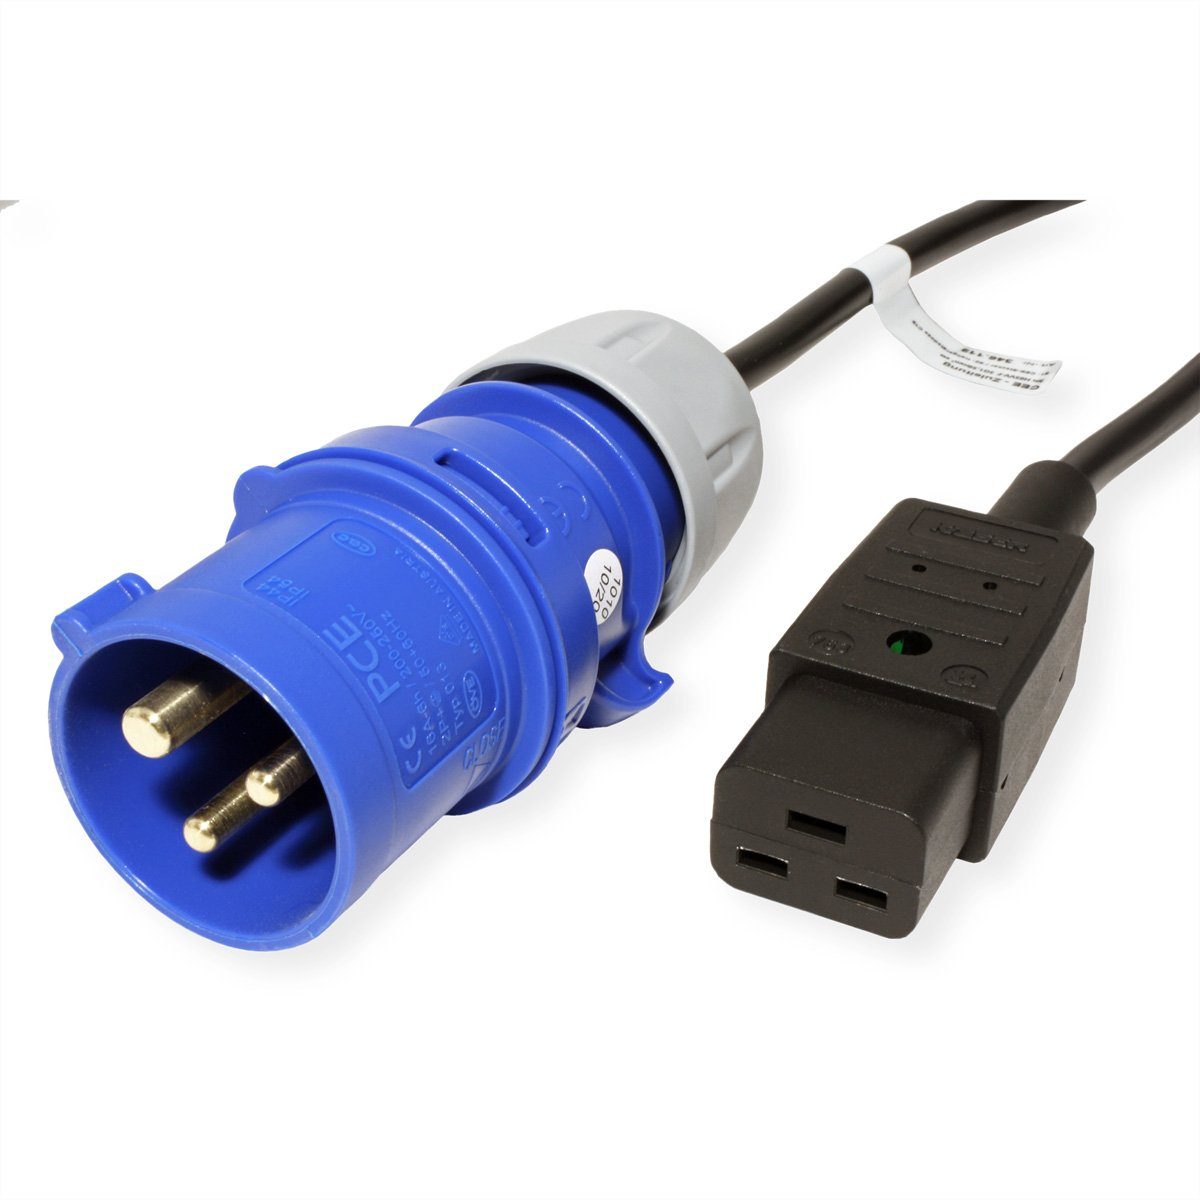 Bachmann Kabel Stecker IEC60309-Blau - Kupplung C19, 3m 16A Stromkabel, IEC  60309 16A 1P+N+PE 230V Campingstecker Männlich (Stecker), IEC320 C19,  Kaltgeräte, 16A Weiblich (Buchse) (300.0 cm)